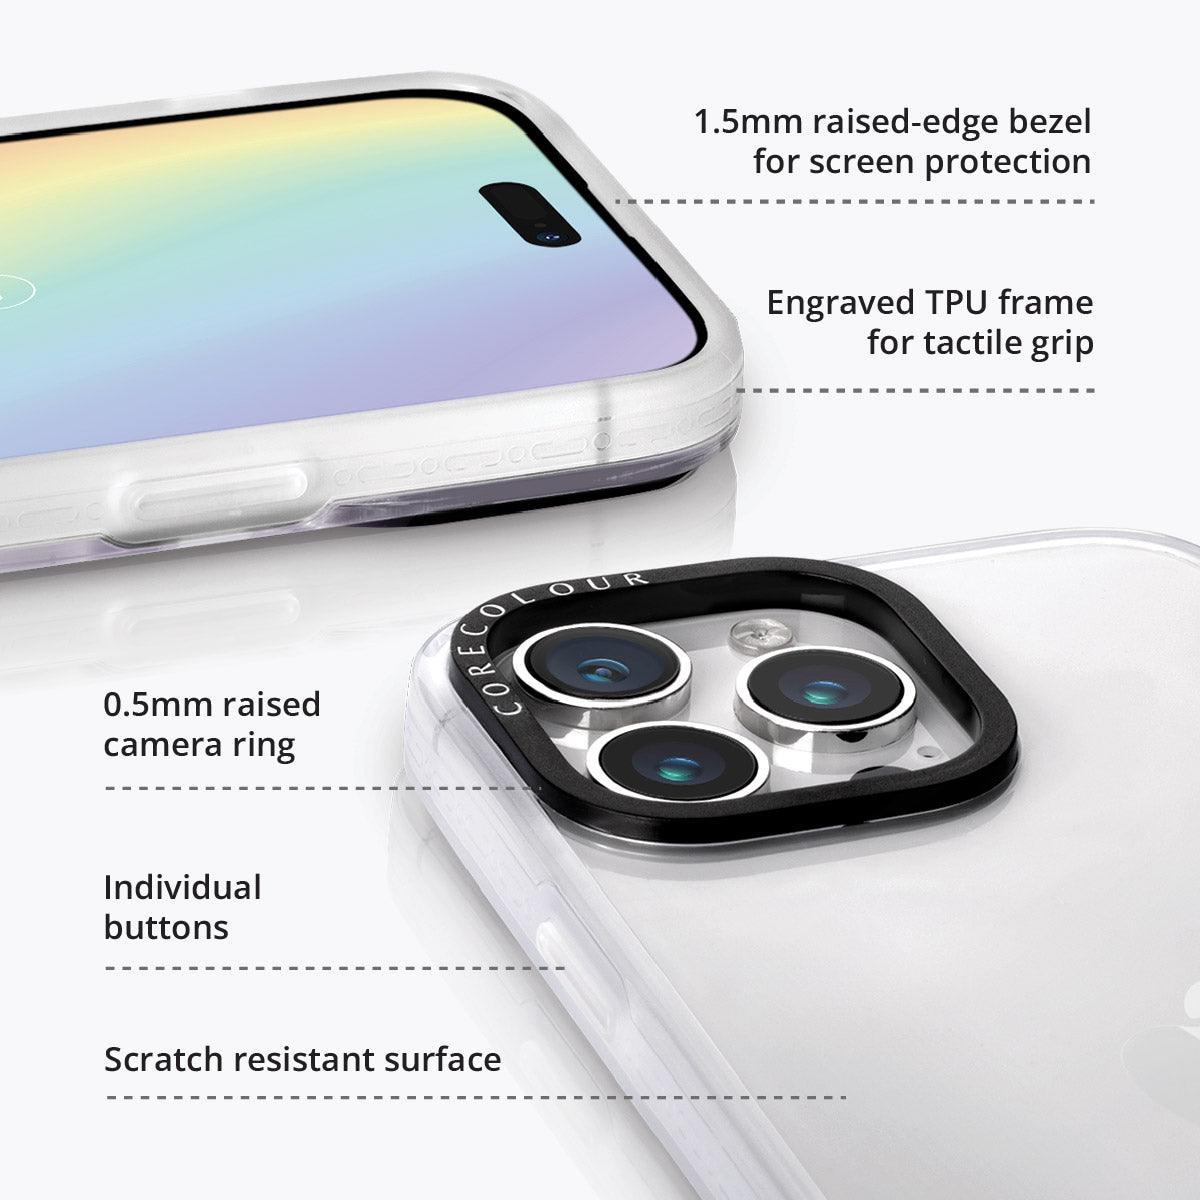 iPhone 14 Panda Heart Phone Case MagSafe Compatible 